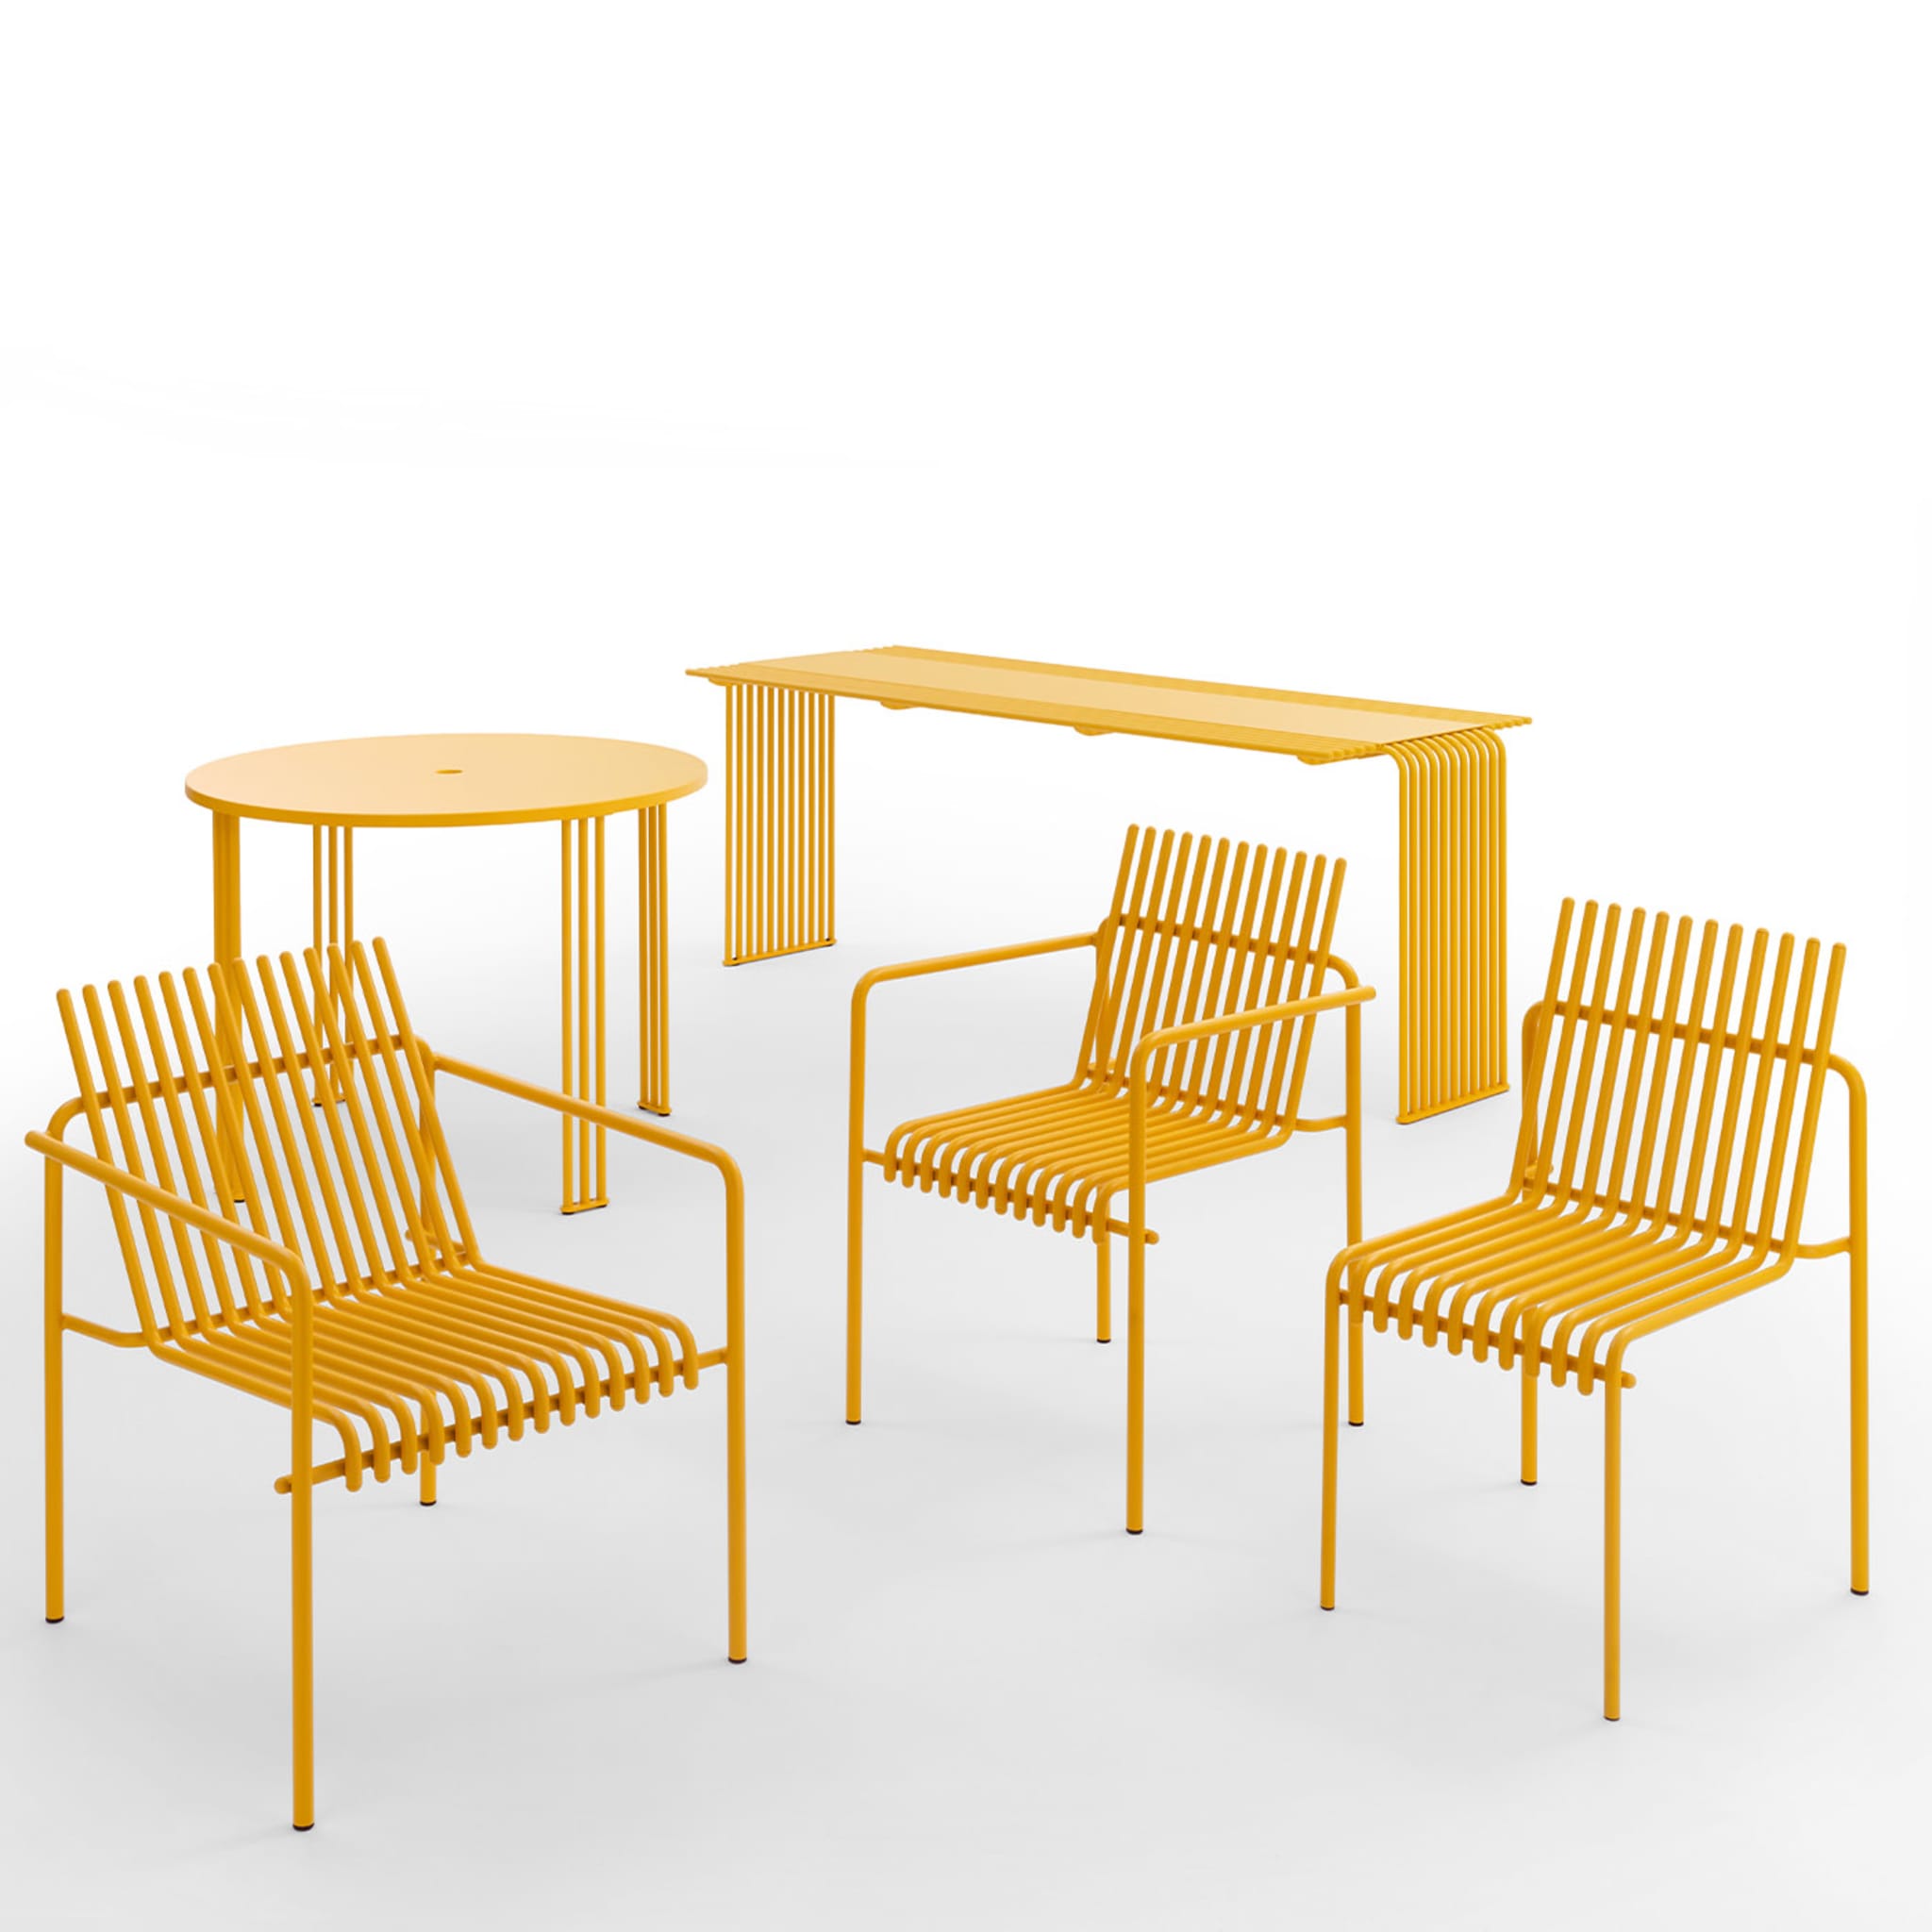 Amalfi Yellow Chair by Basaglia + Rota Nodari - Alternative view 2